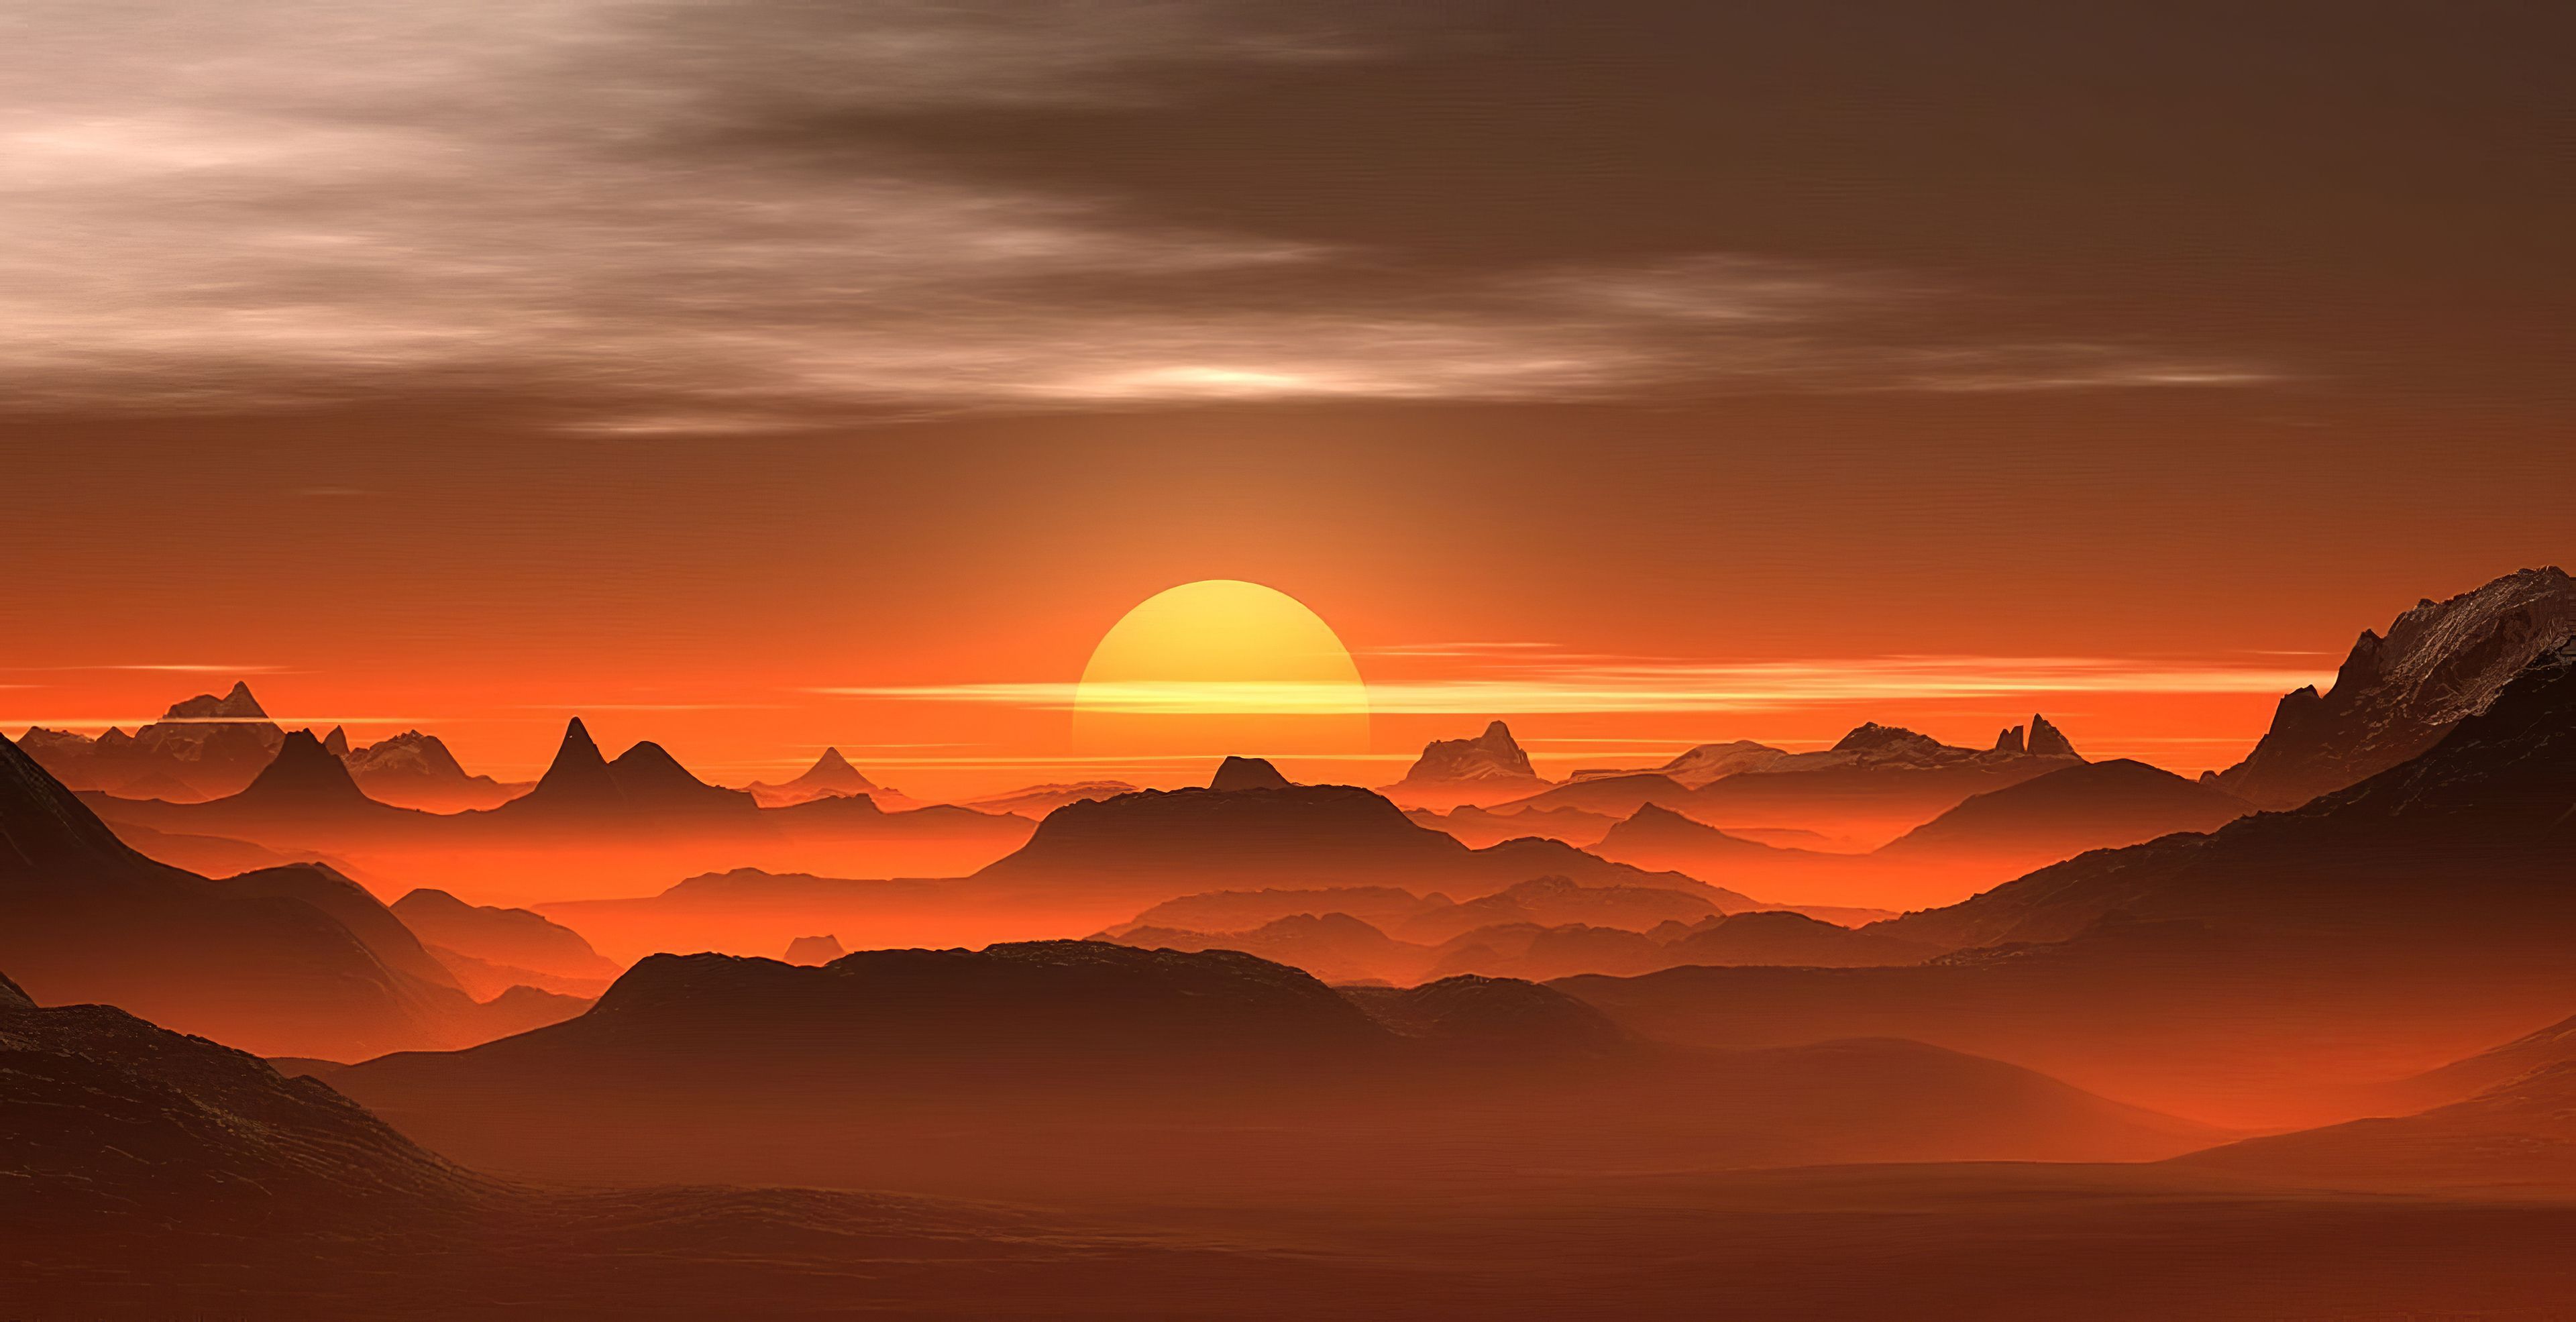 Sunset Mist Desert 4k, HD Artist, 4k Wallpaper, Image, Background, Photo and Picture